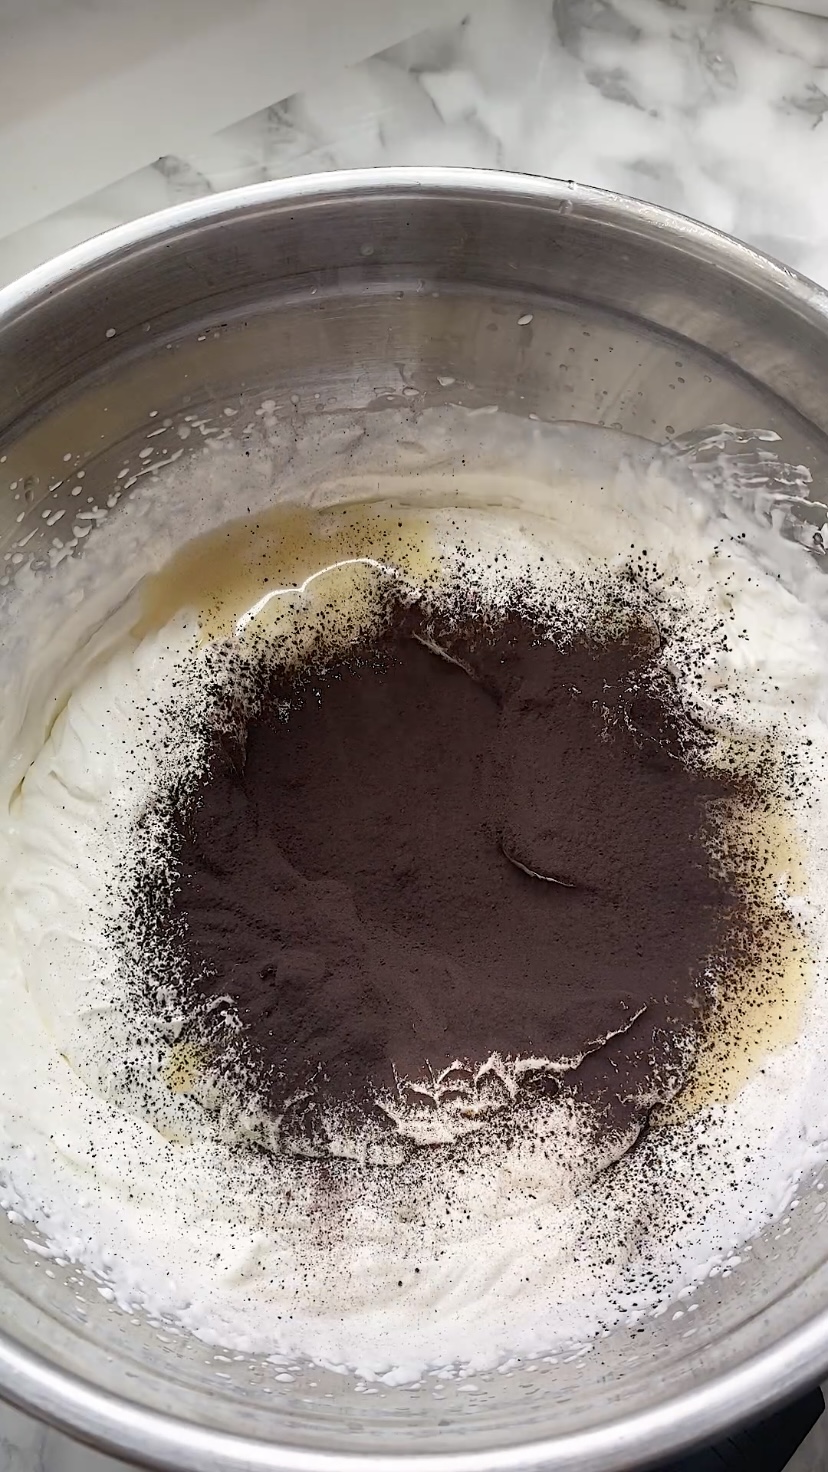 Cocoa powder on top of a no-churn ice cream base.